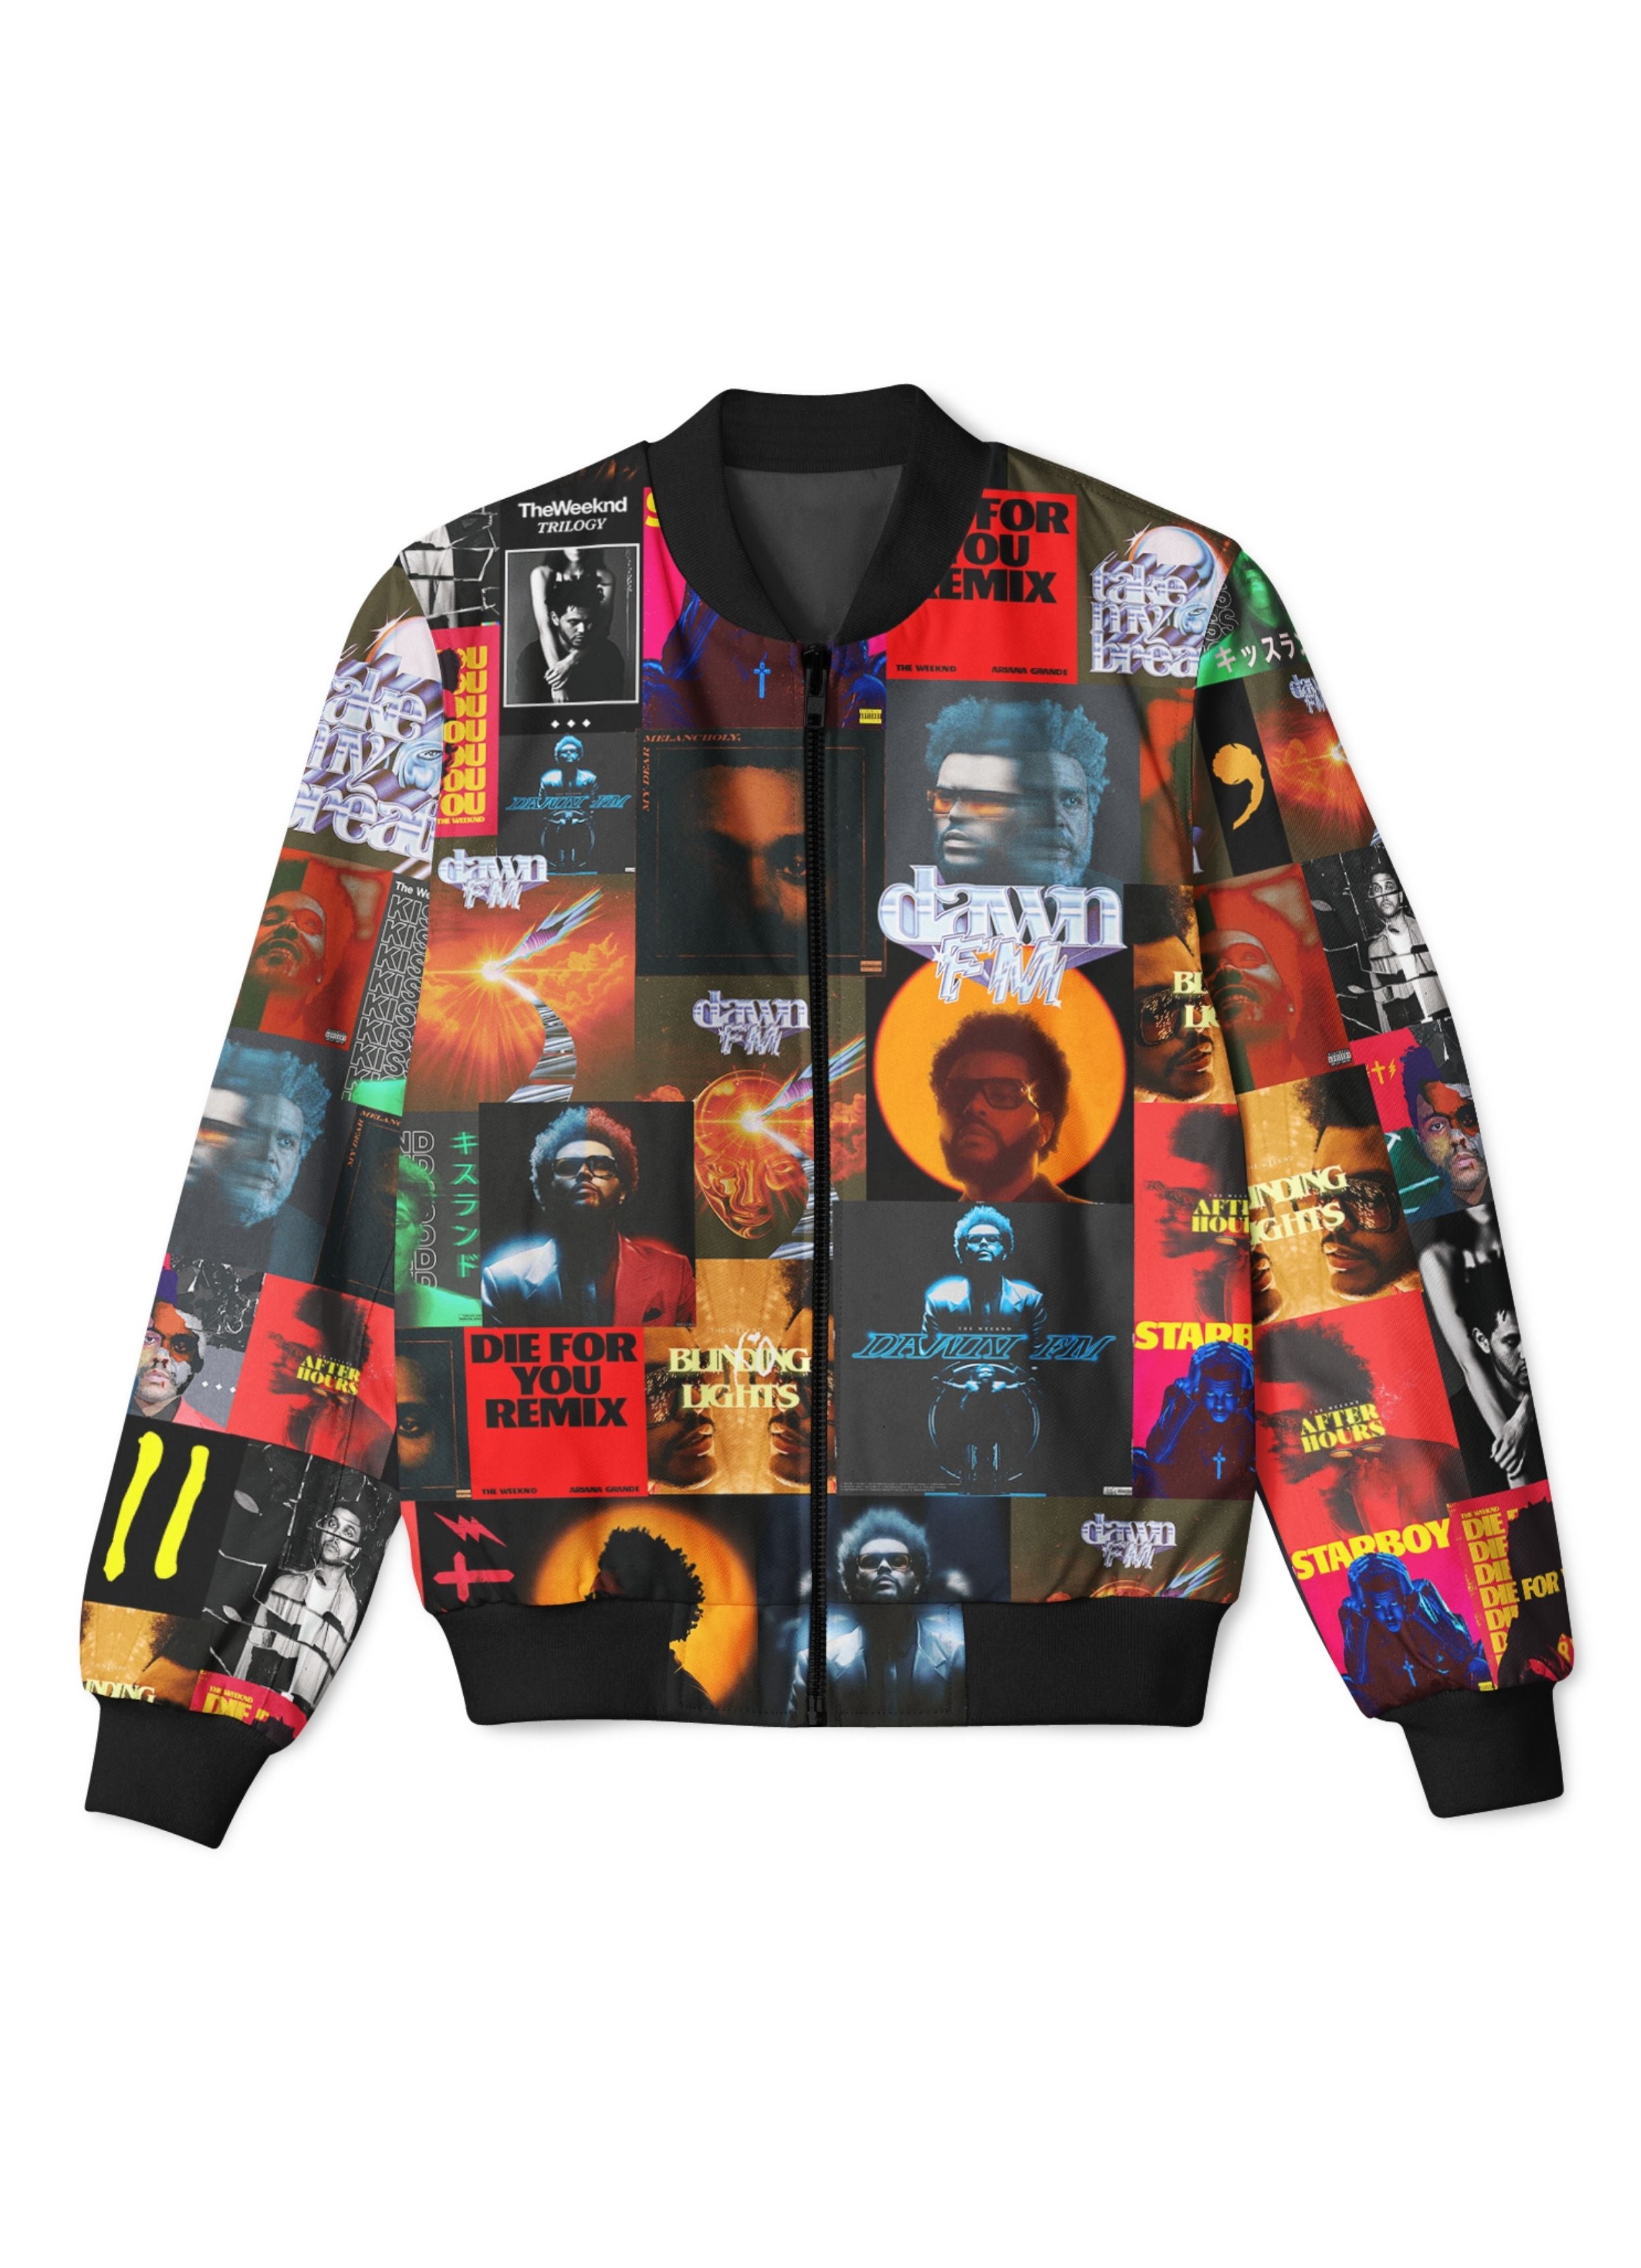 The Weeknd Bomber Jacket